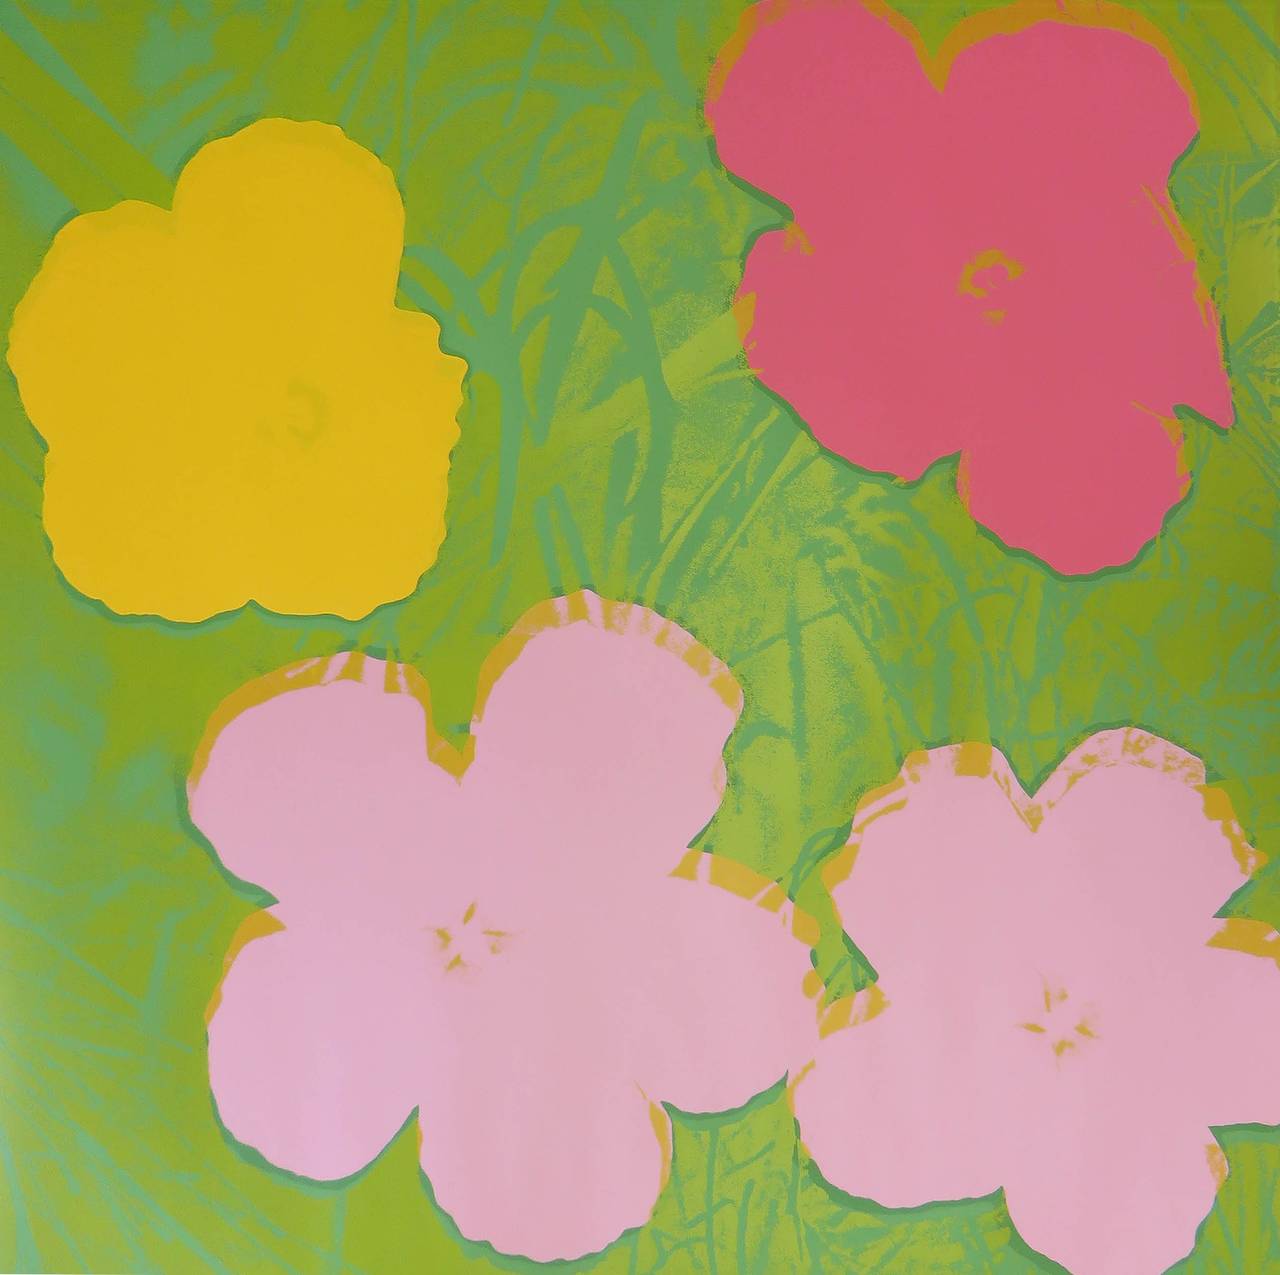 Andy Warhol Landscape Print - Flowers 68